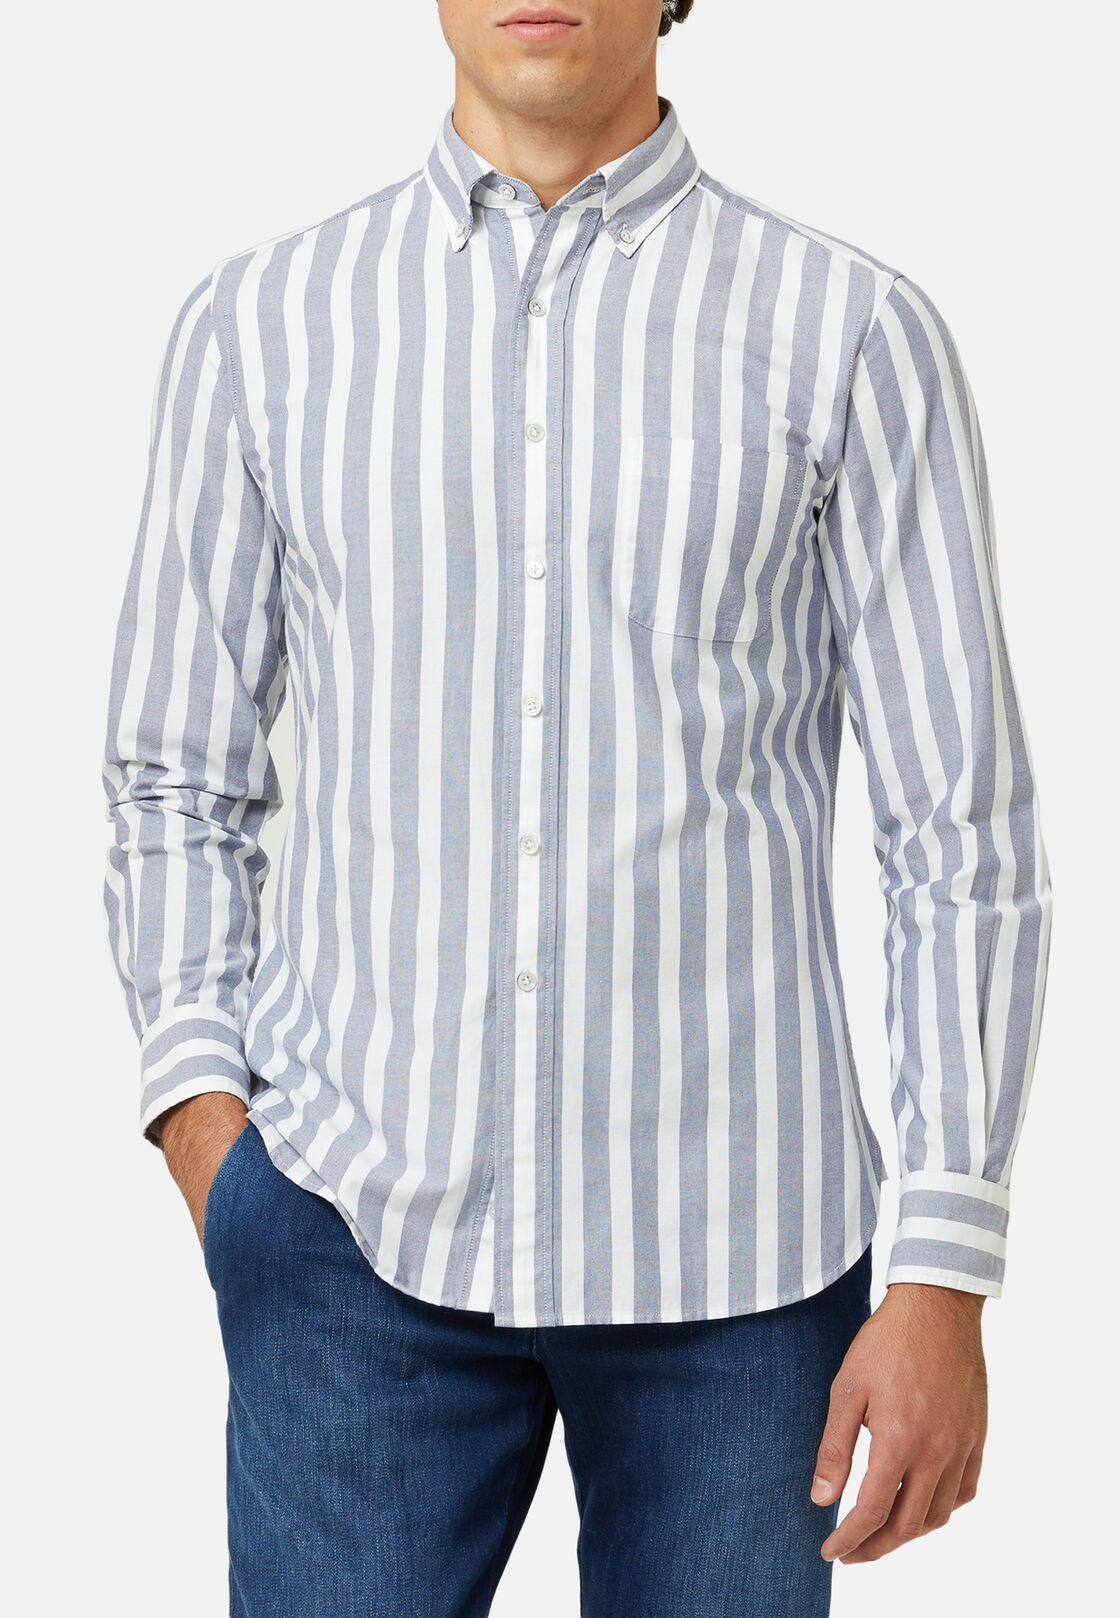 Regular fit blue striped cotton shirt, Blue, hi-res